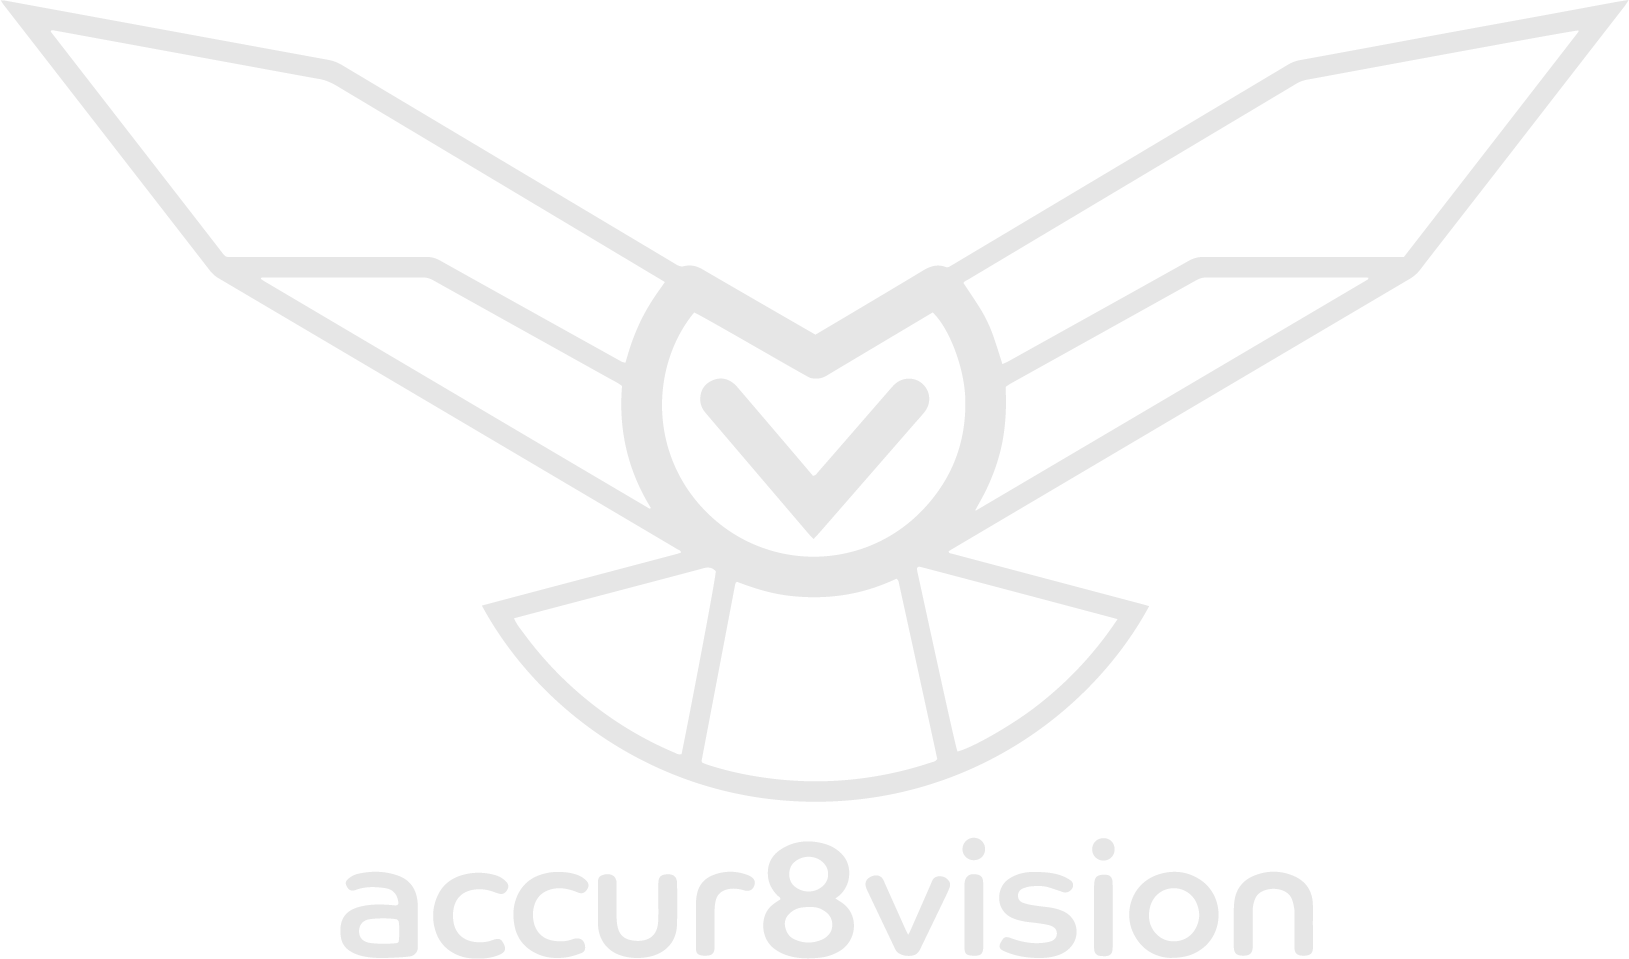 Accur8vision logo greyscale